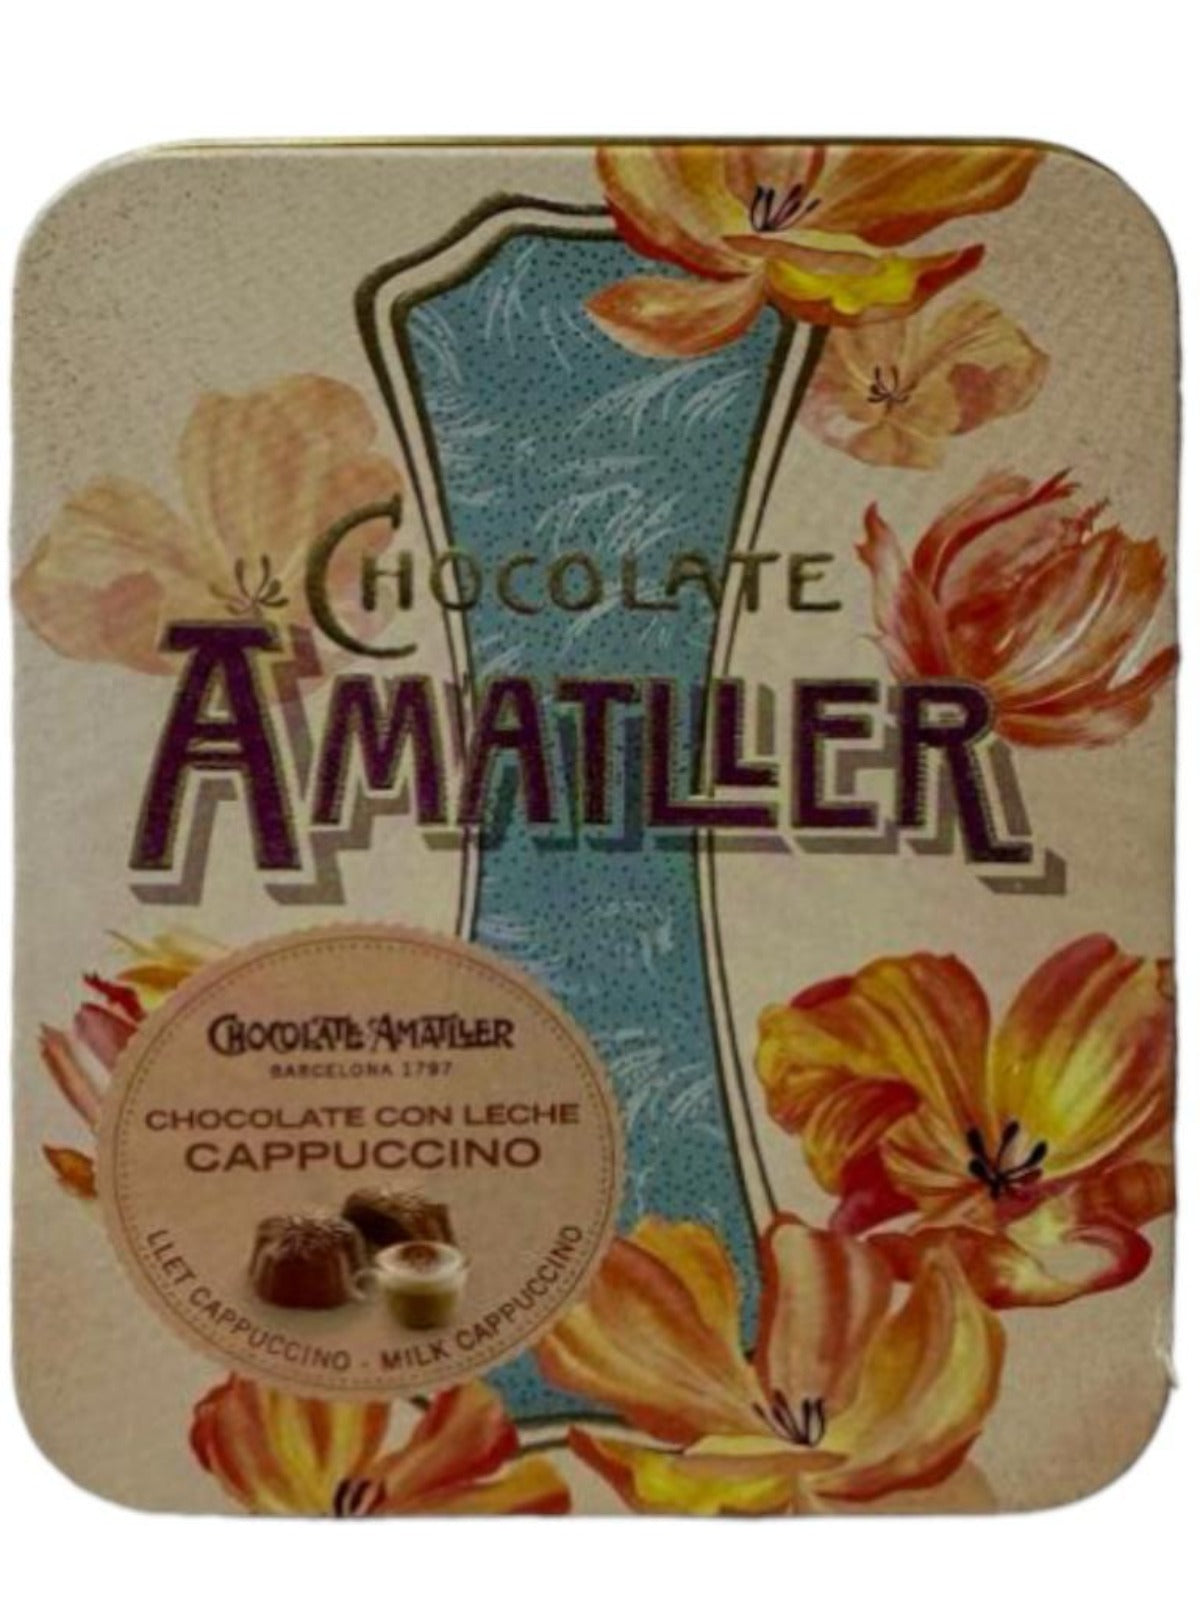 Chocolate Amatller Milk Chocolate with Cappuccino Praline 72g